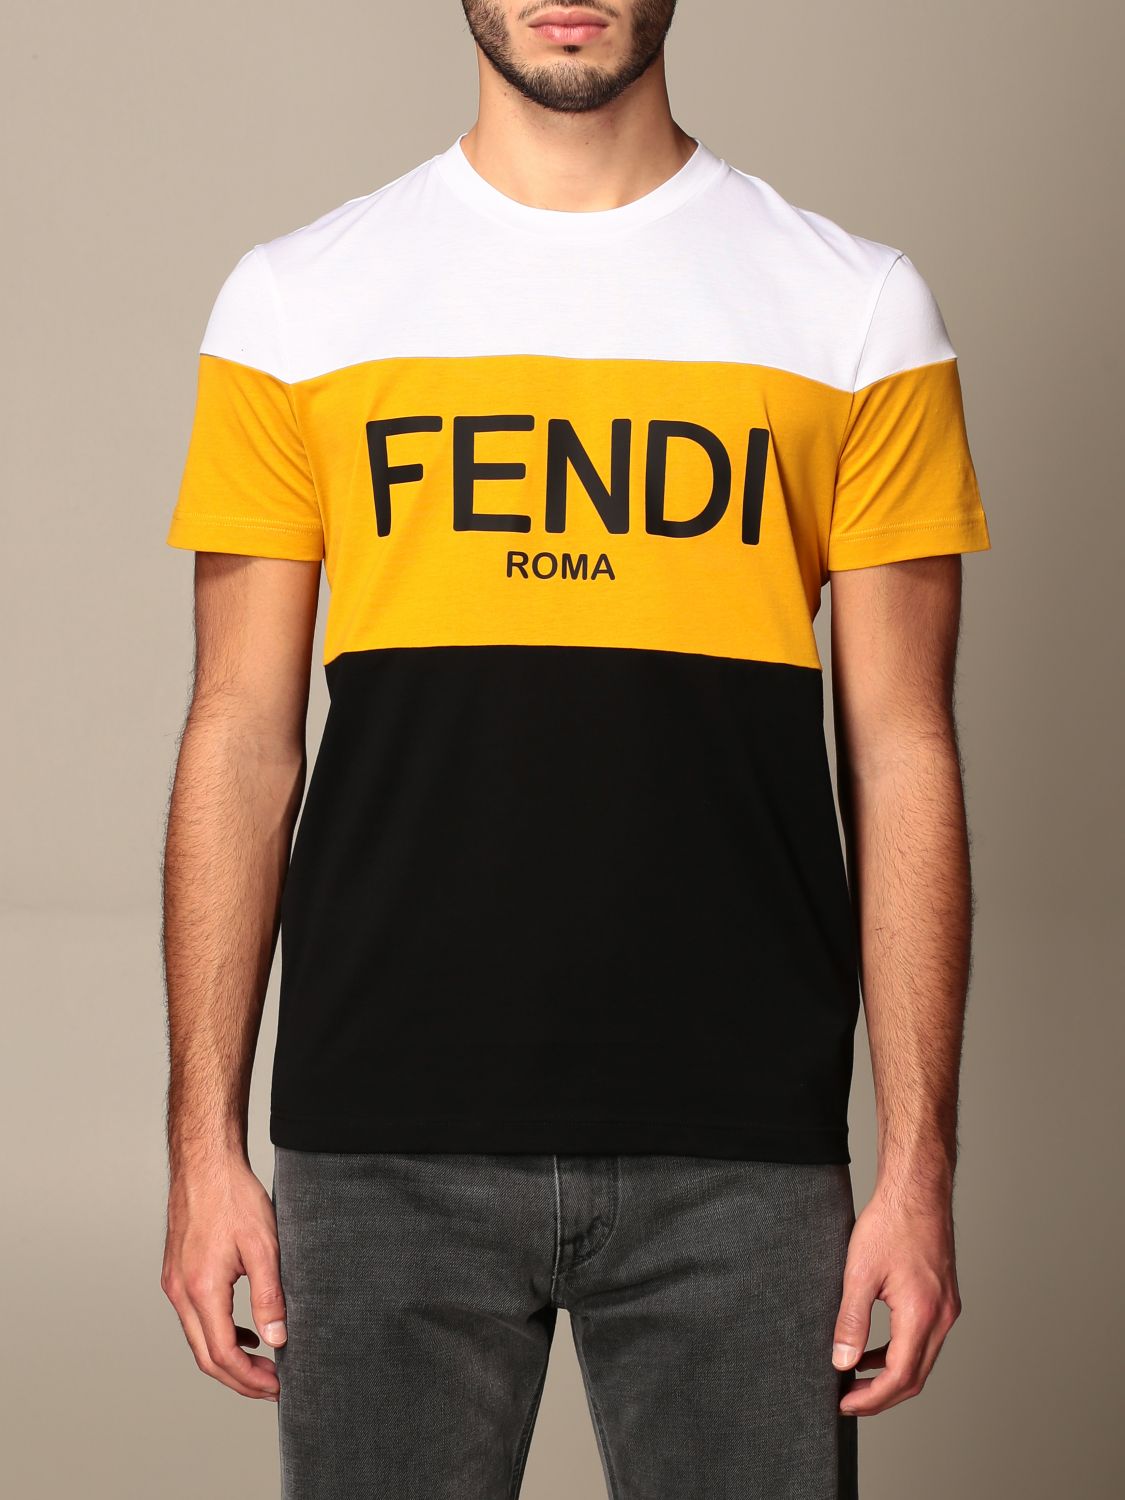 fendi t shirt black and yellow